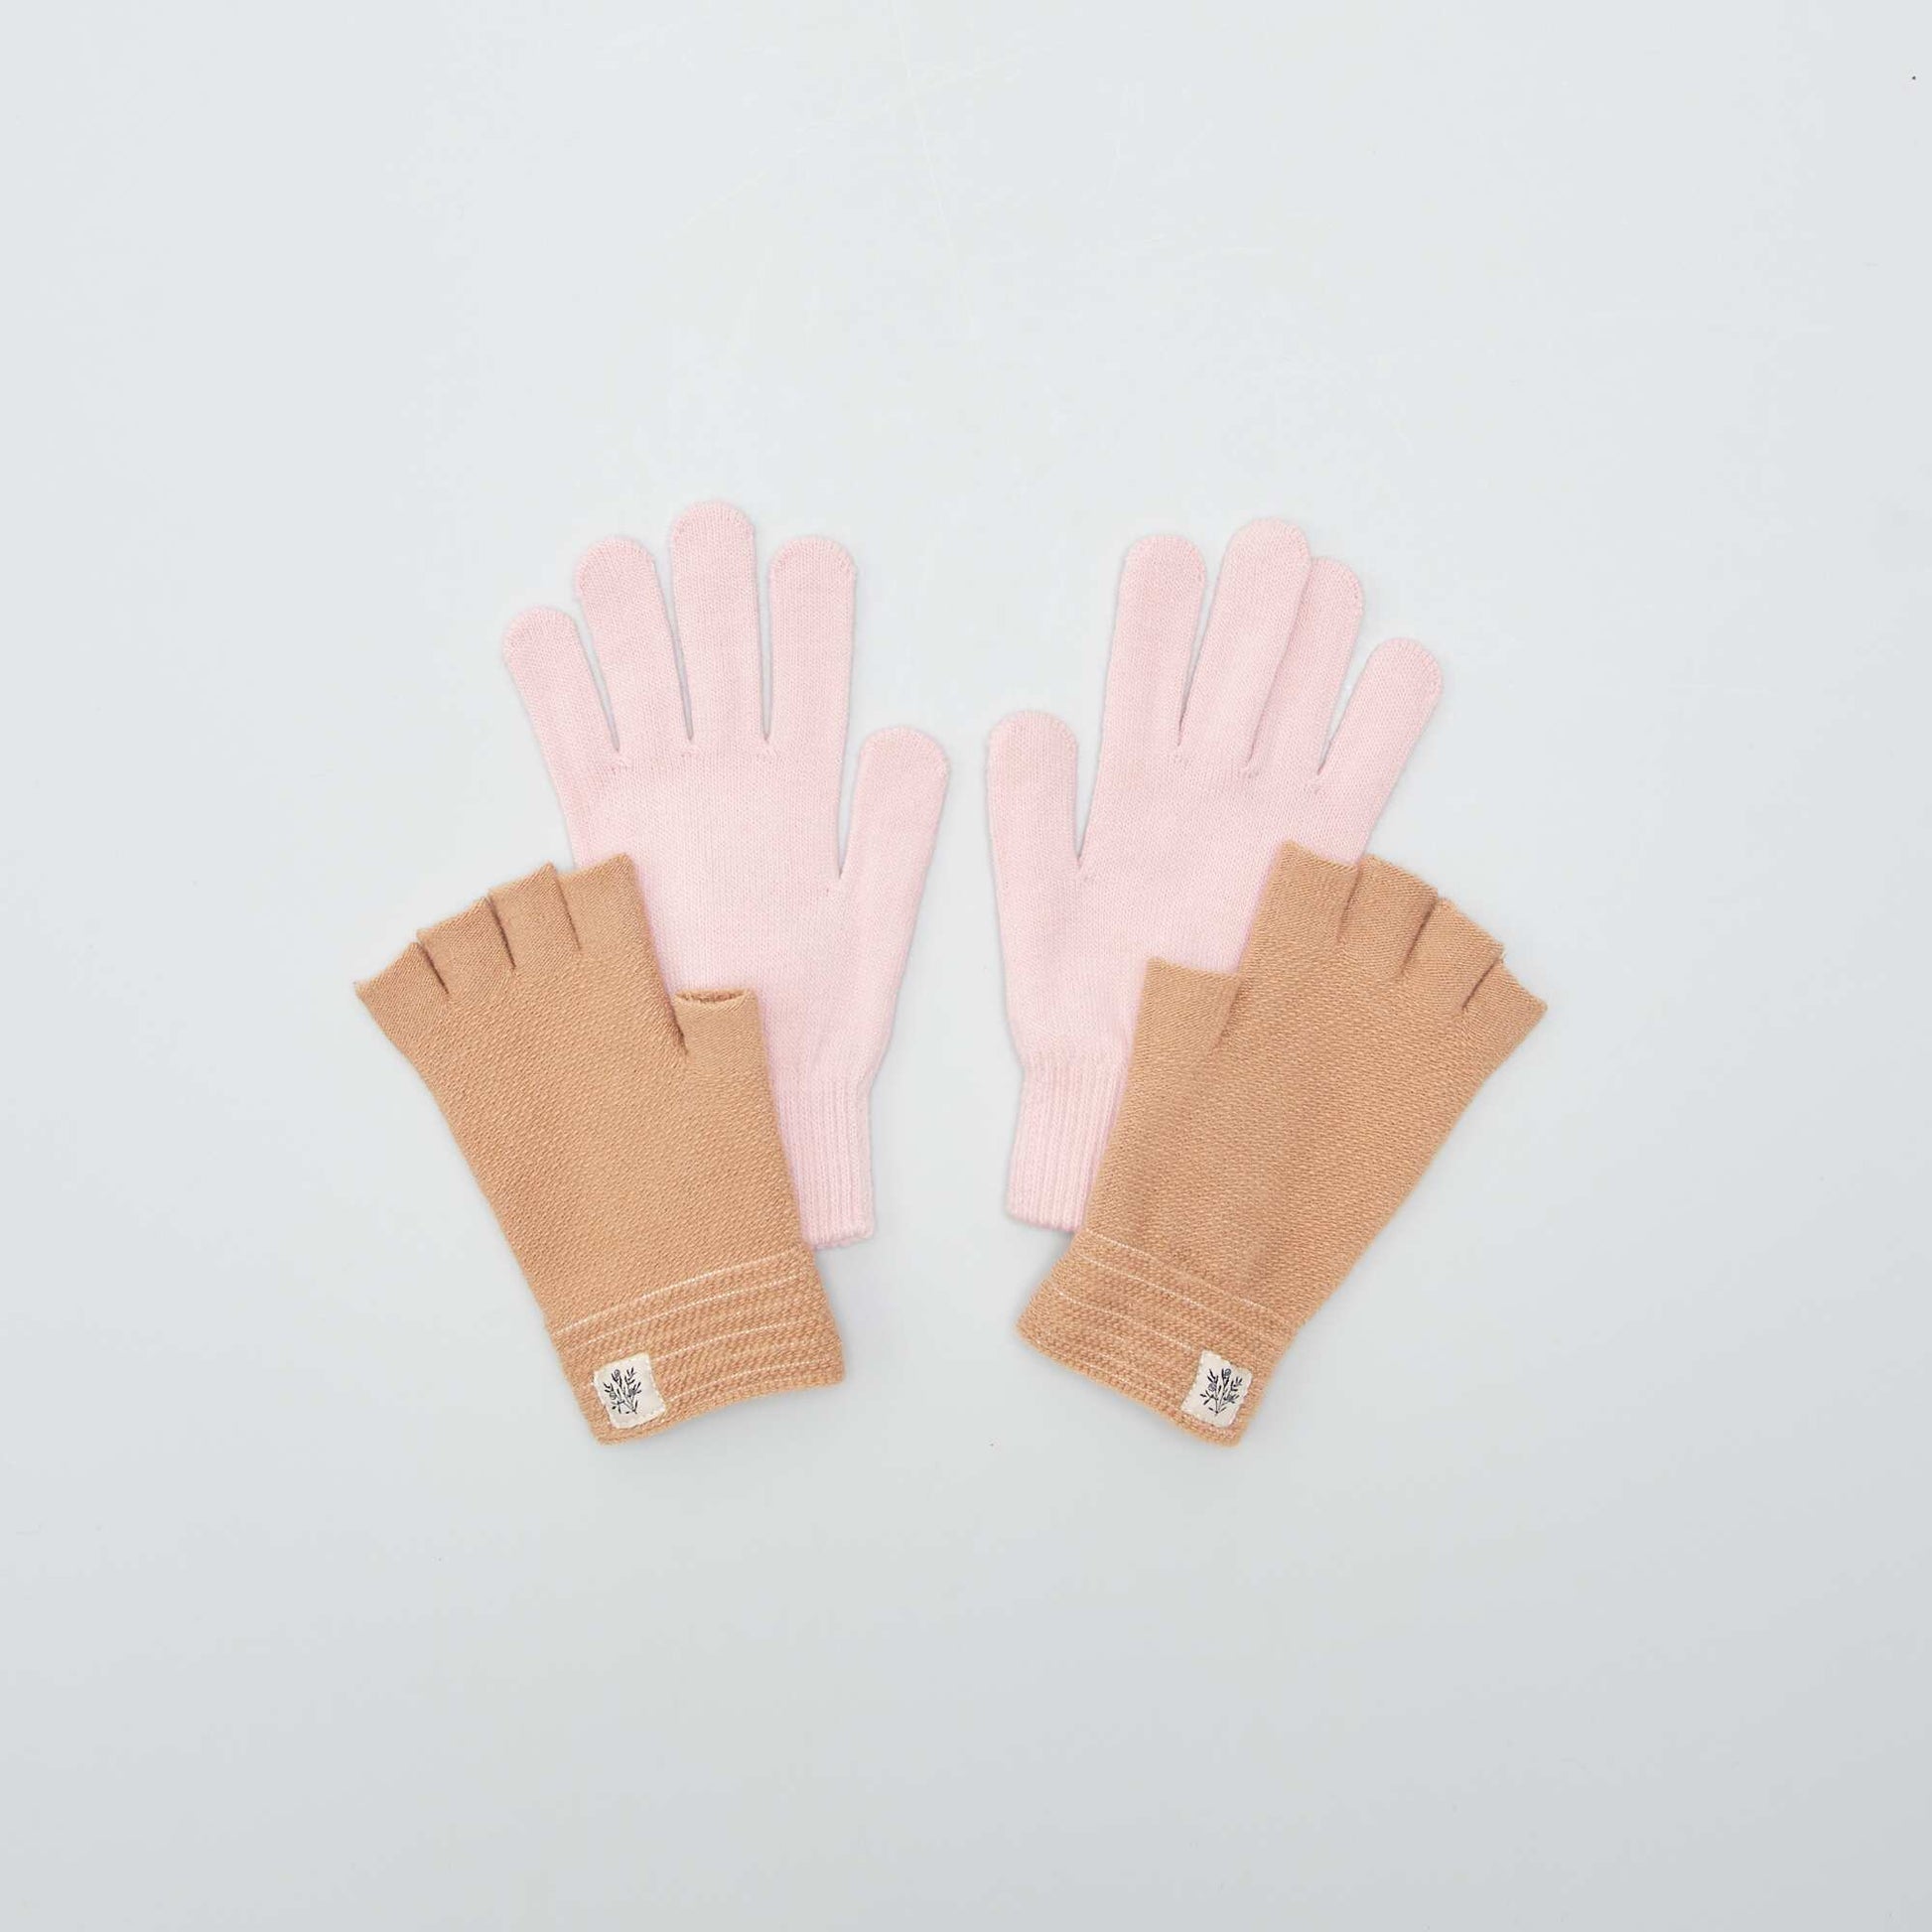 Lot de 2 paires de gants - rose - Kiabi - 3.00€